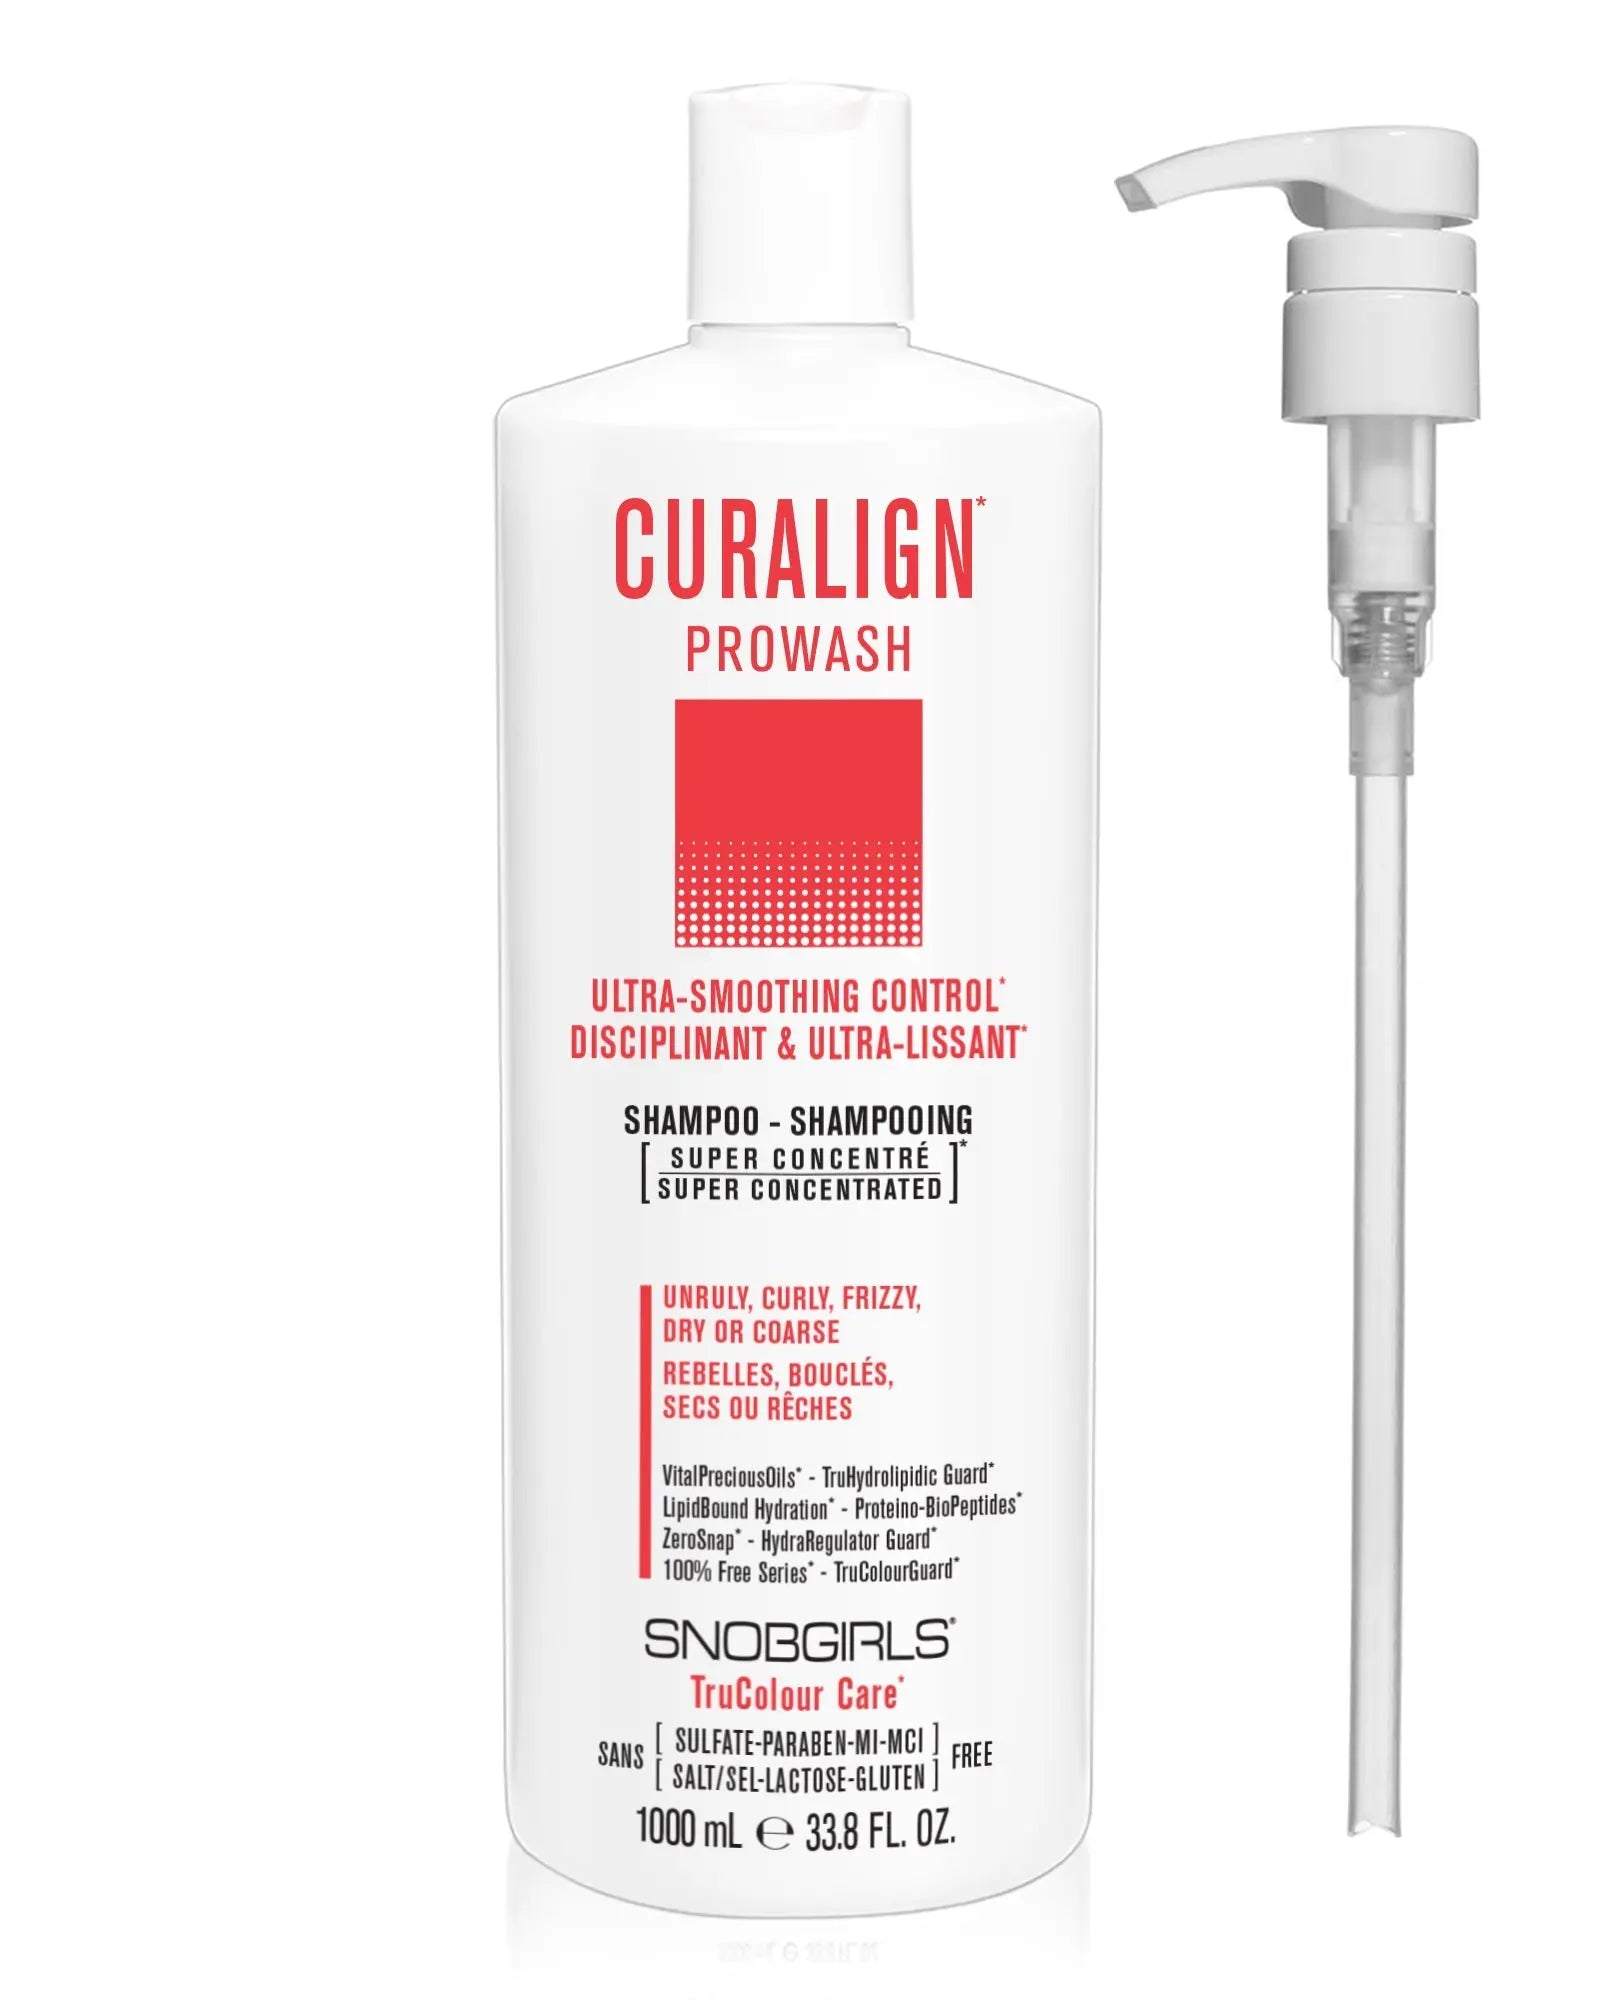 CURALIGN Prowash (shampoo) 1000 mL + Pump - SNOBGIRLS Canada